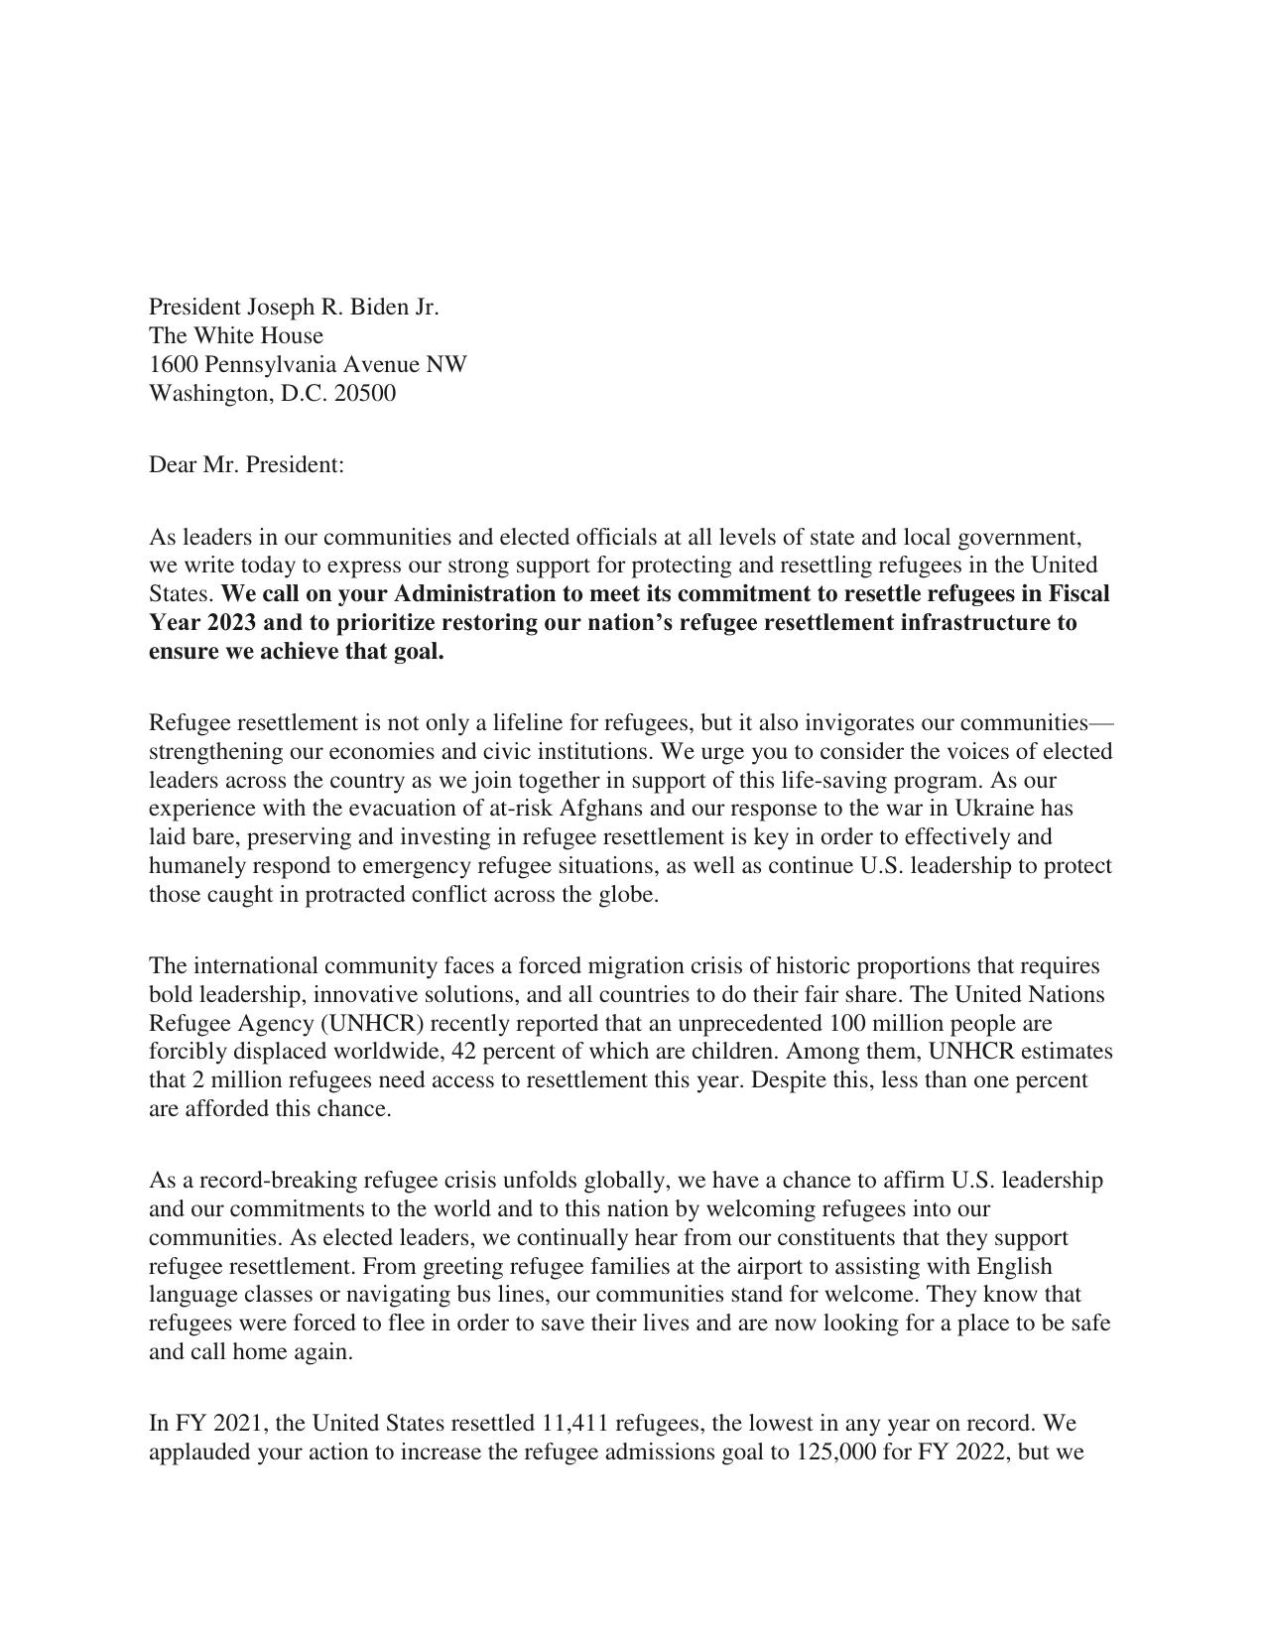 Dubuque letter to Biden